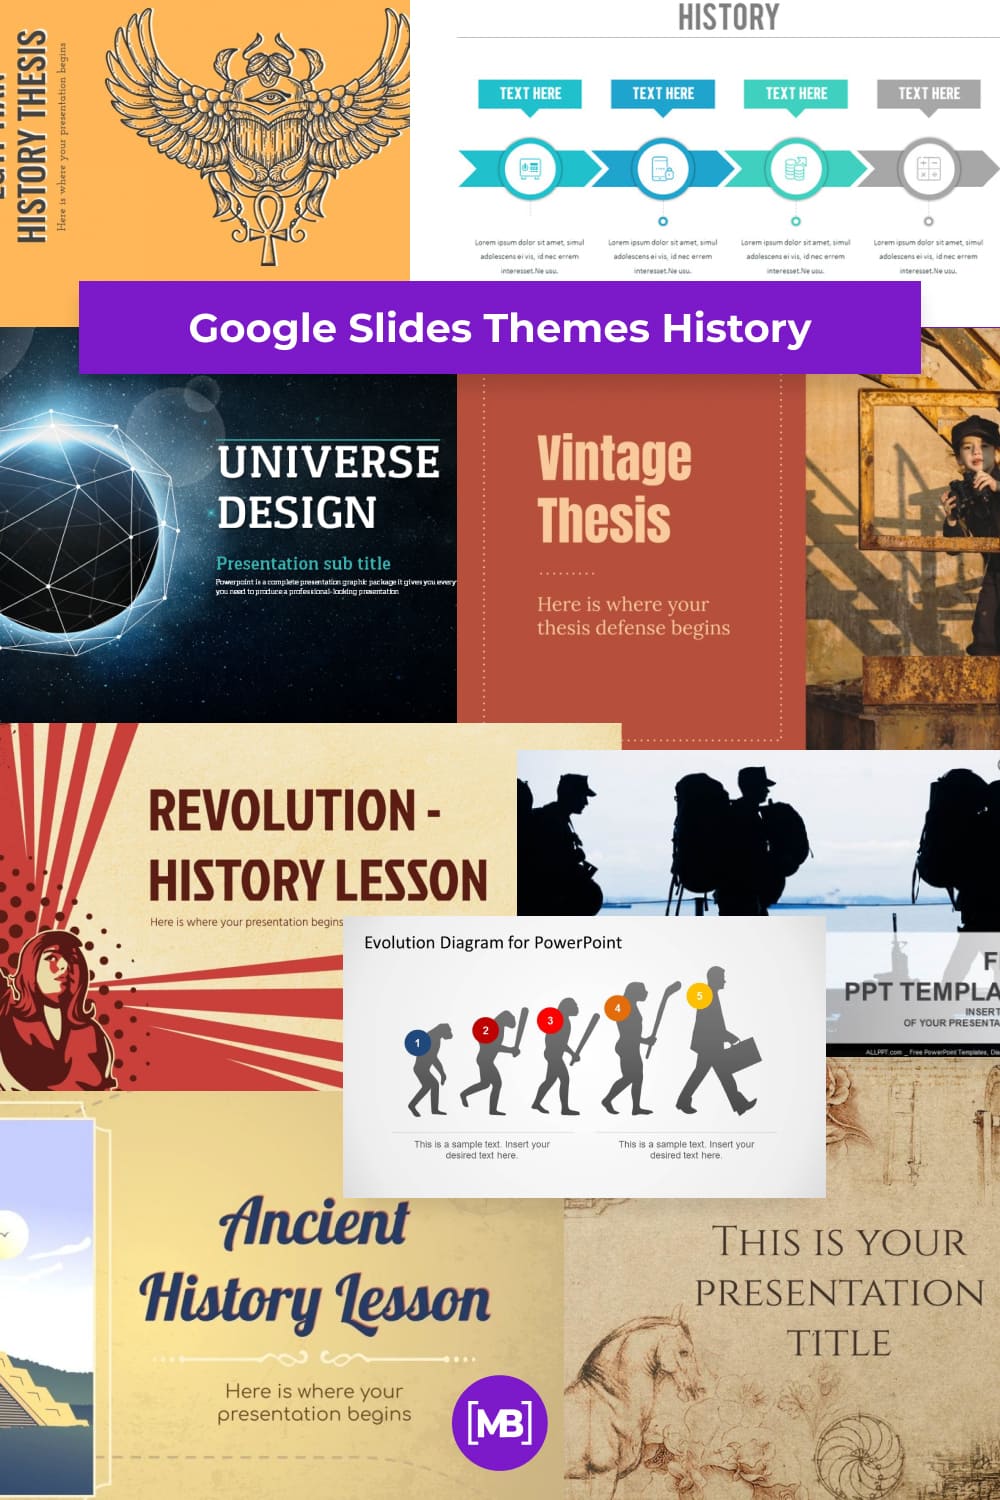 Google Slides Themes History Pinterest.